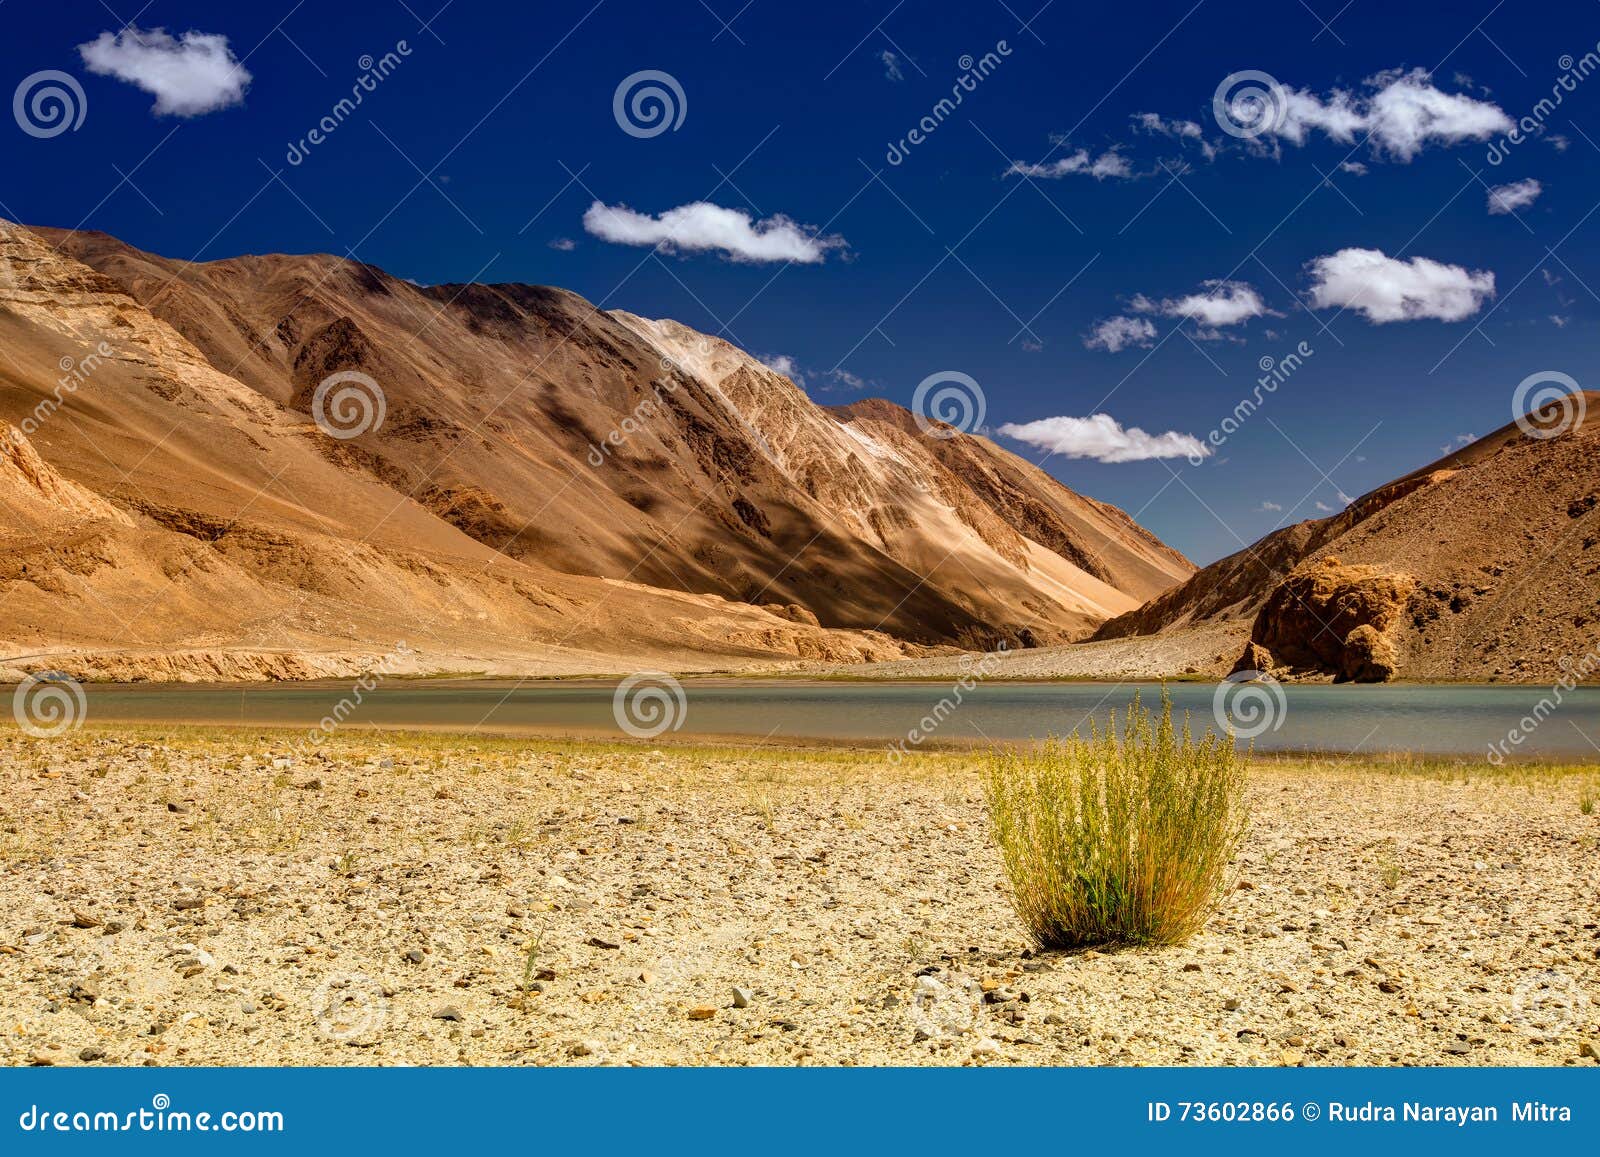 Mountains and Green Vegetation, Chagor Tso - Lake ,Leh,Ladakh,Jammu Kashmir, India Stock Photo - Image of natural, nature: 73602866